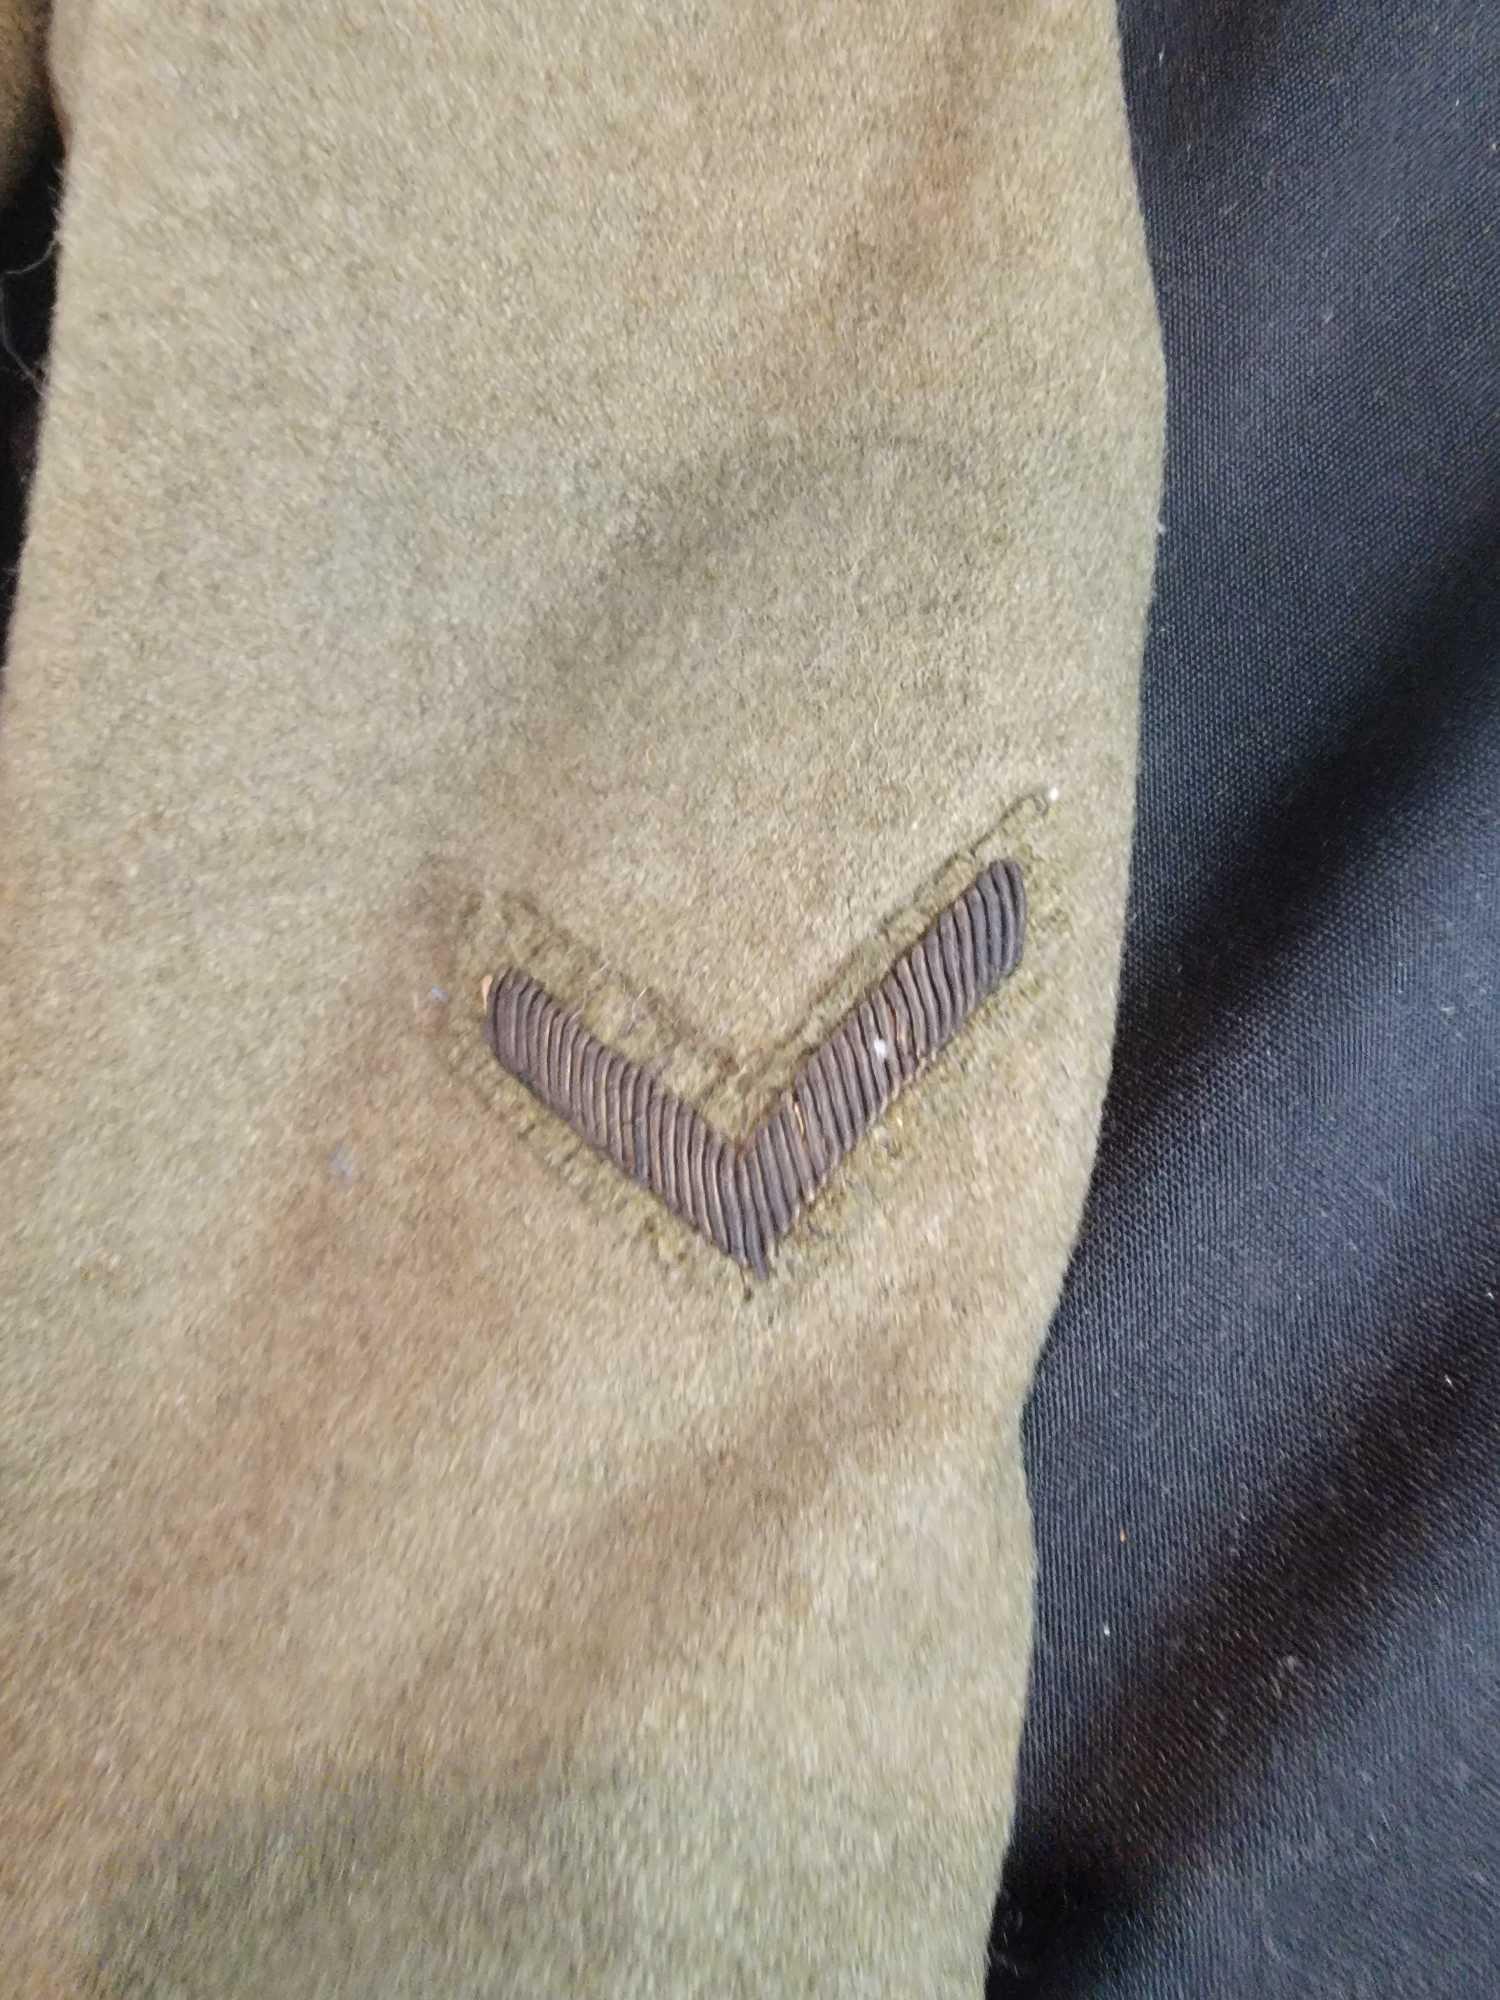 US WWI Medical Uniform Tunic Pants more